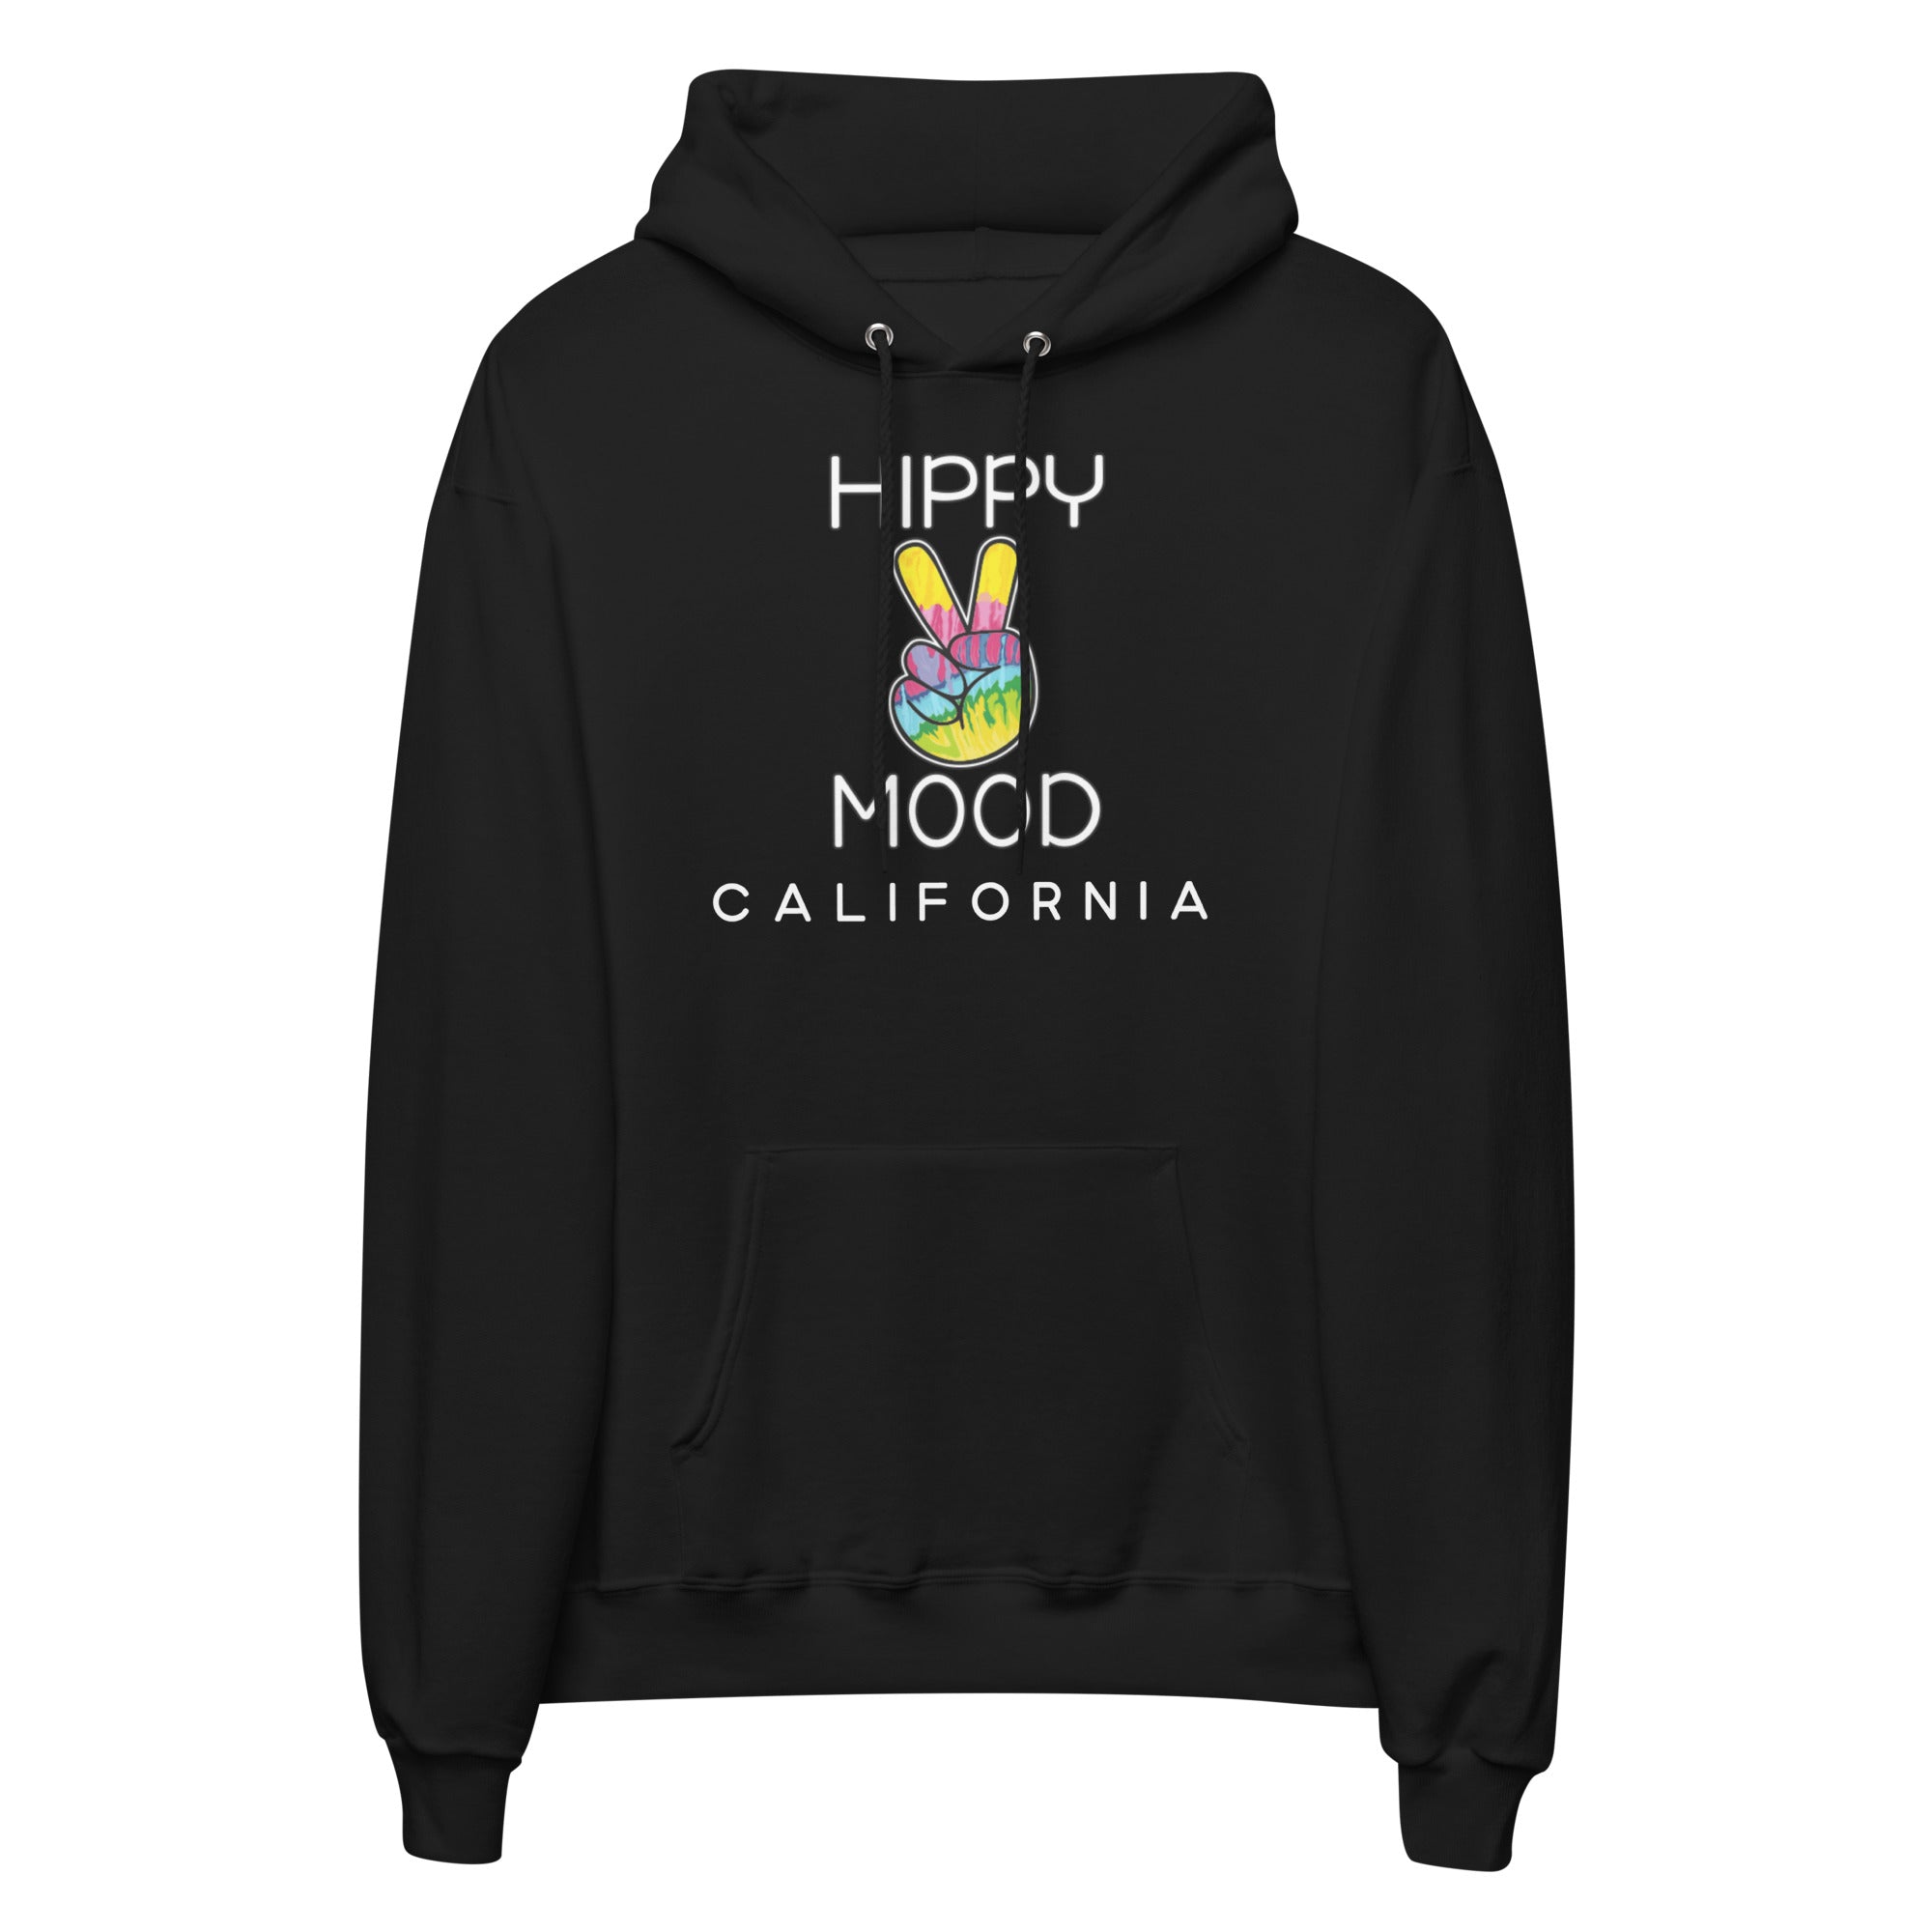 Hippy Mood California Hoodie